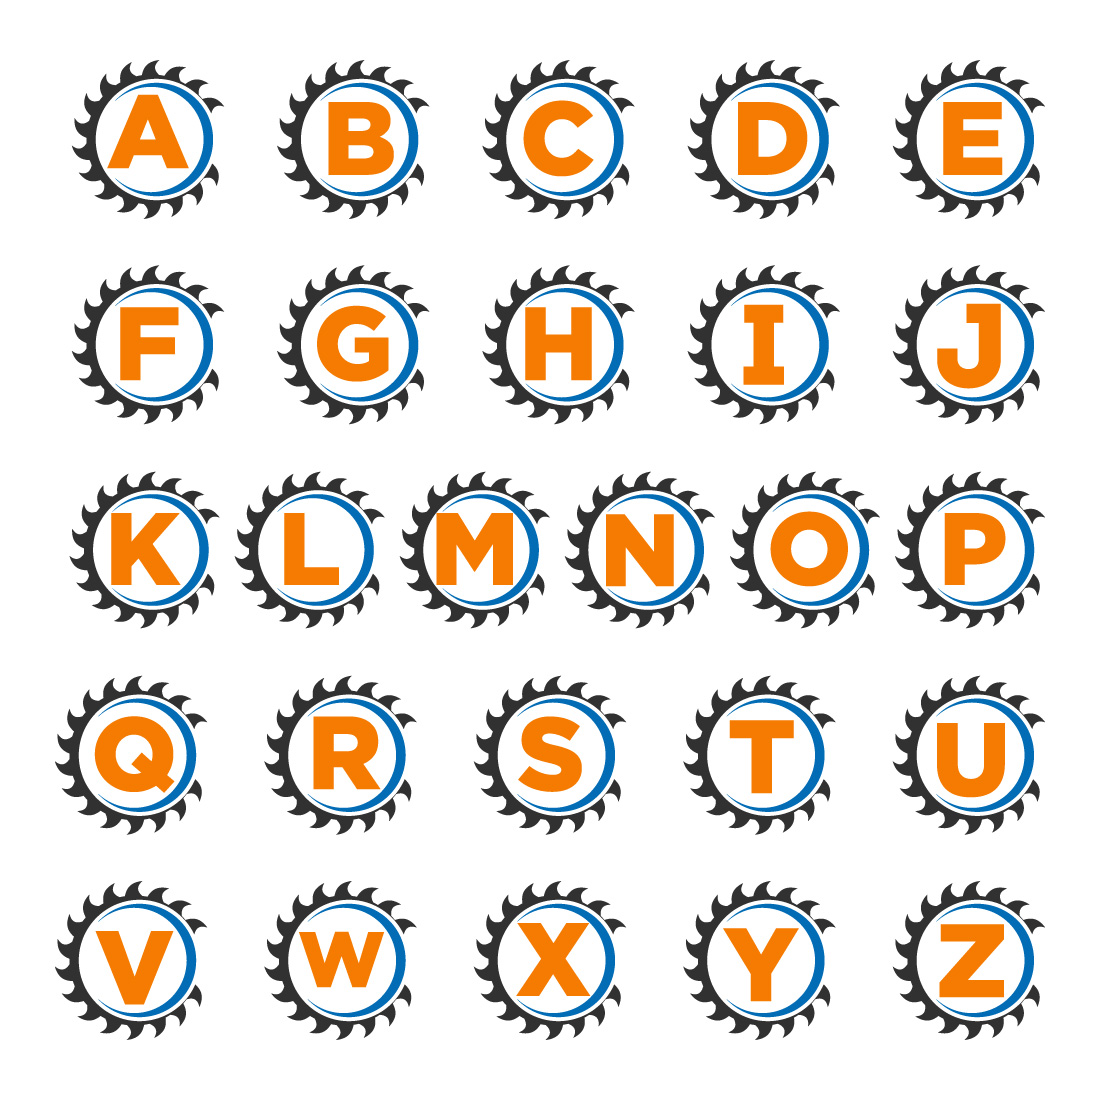 Initial A-Z monogram alphabet with the saw blade Carpentry, woodworking logo design Font emblem preview image.